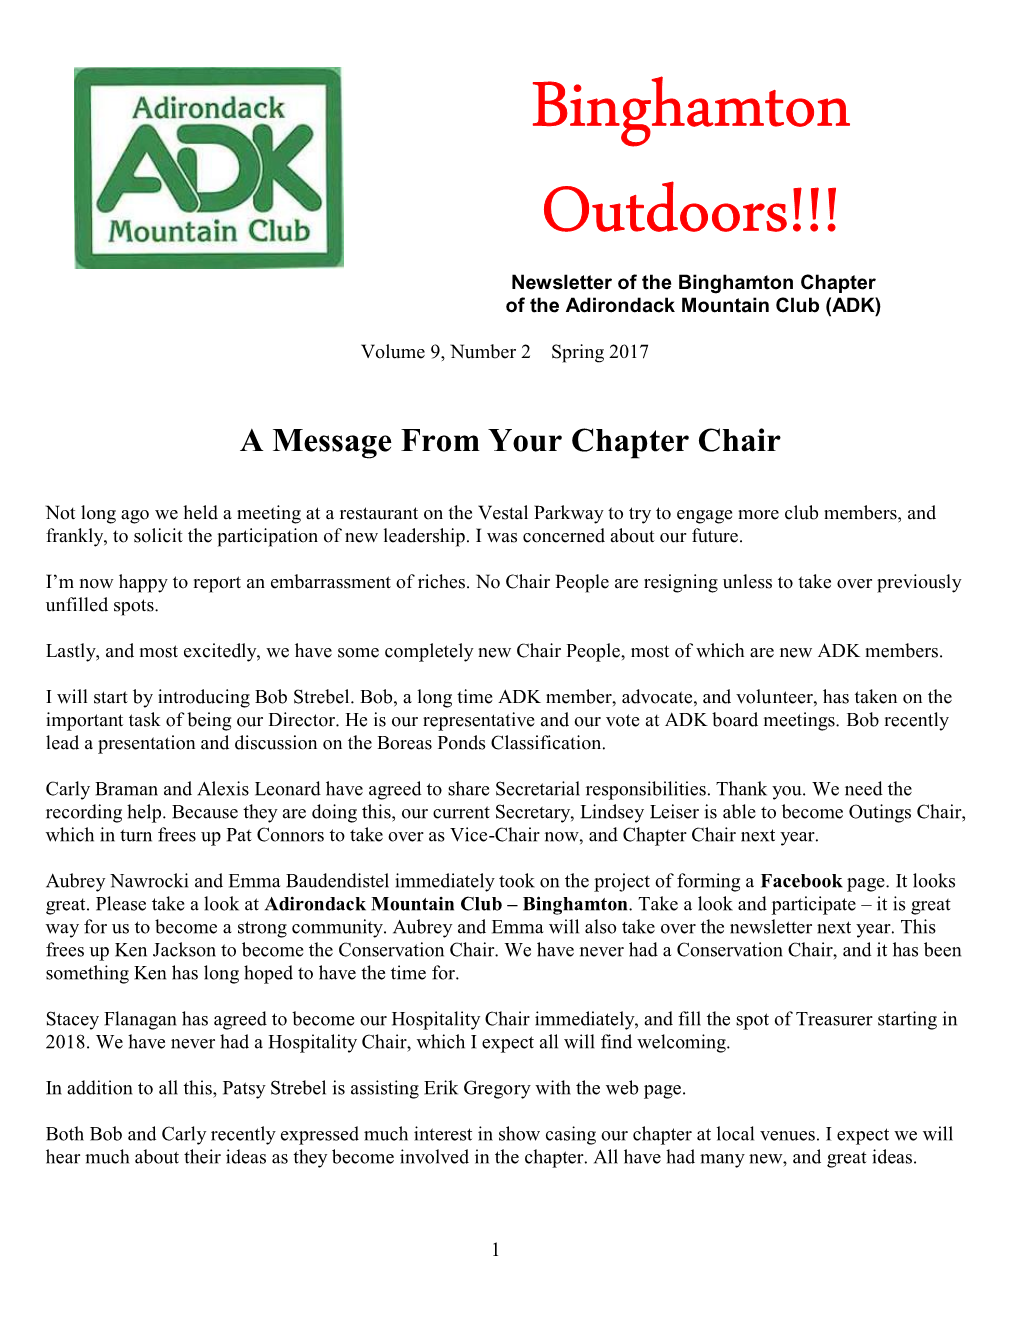 Binghamton Outdoors!!! Newsletter of the Binghamton Chapter of the Adirondack Mountain Club (ADK)